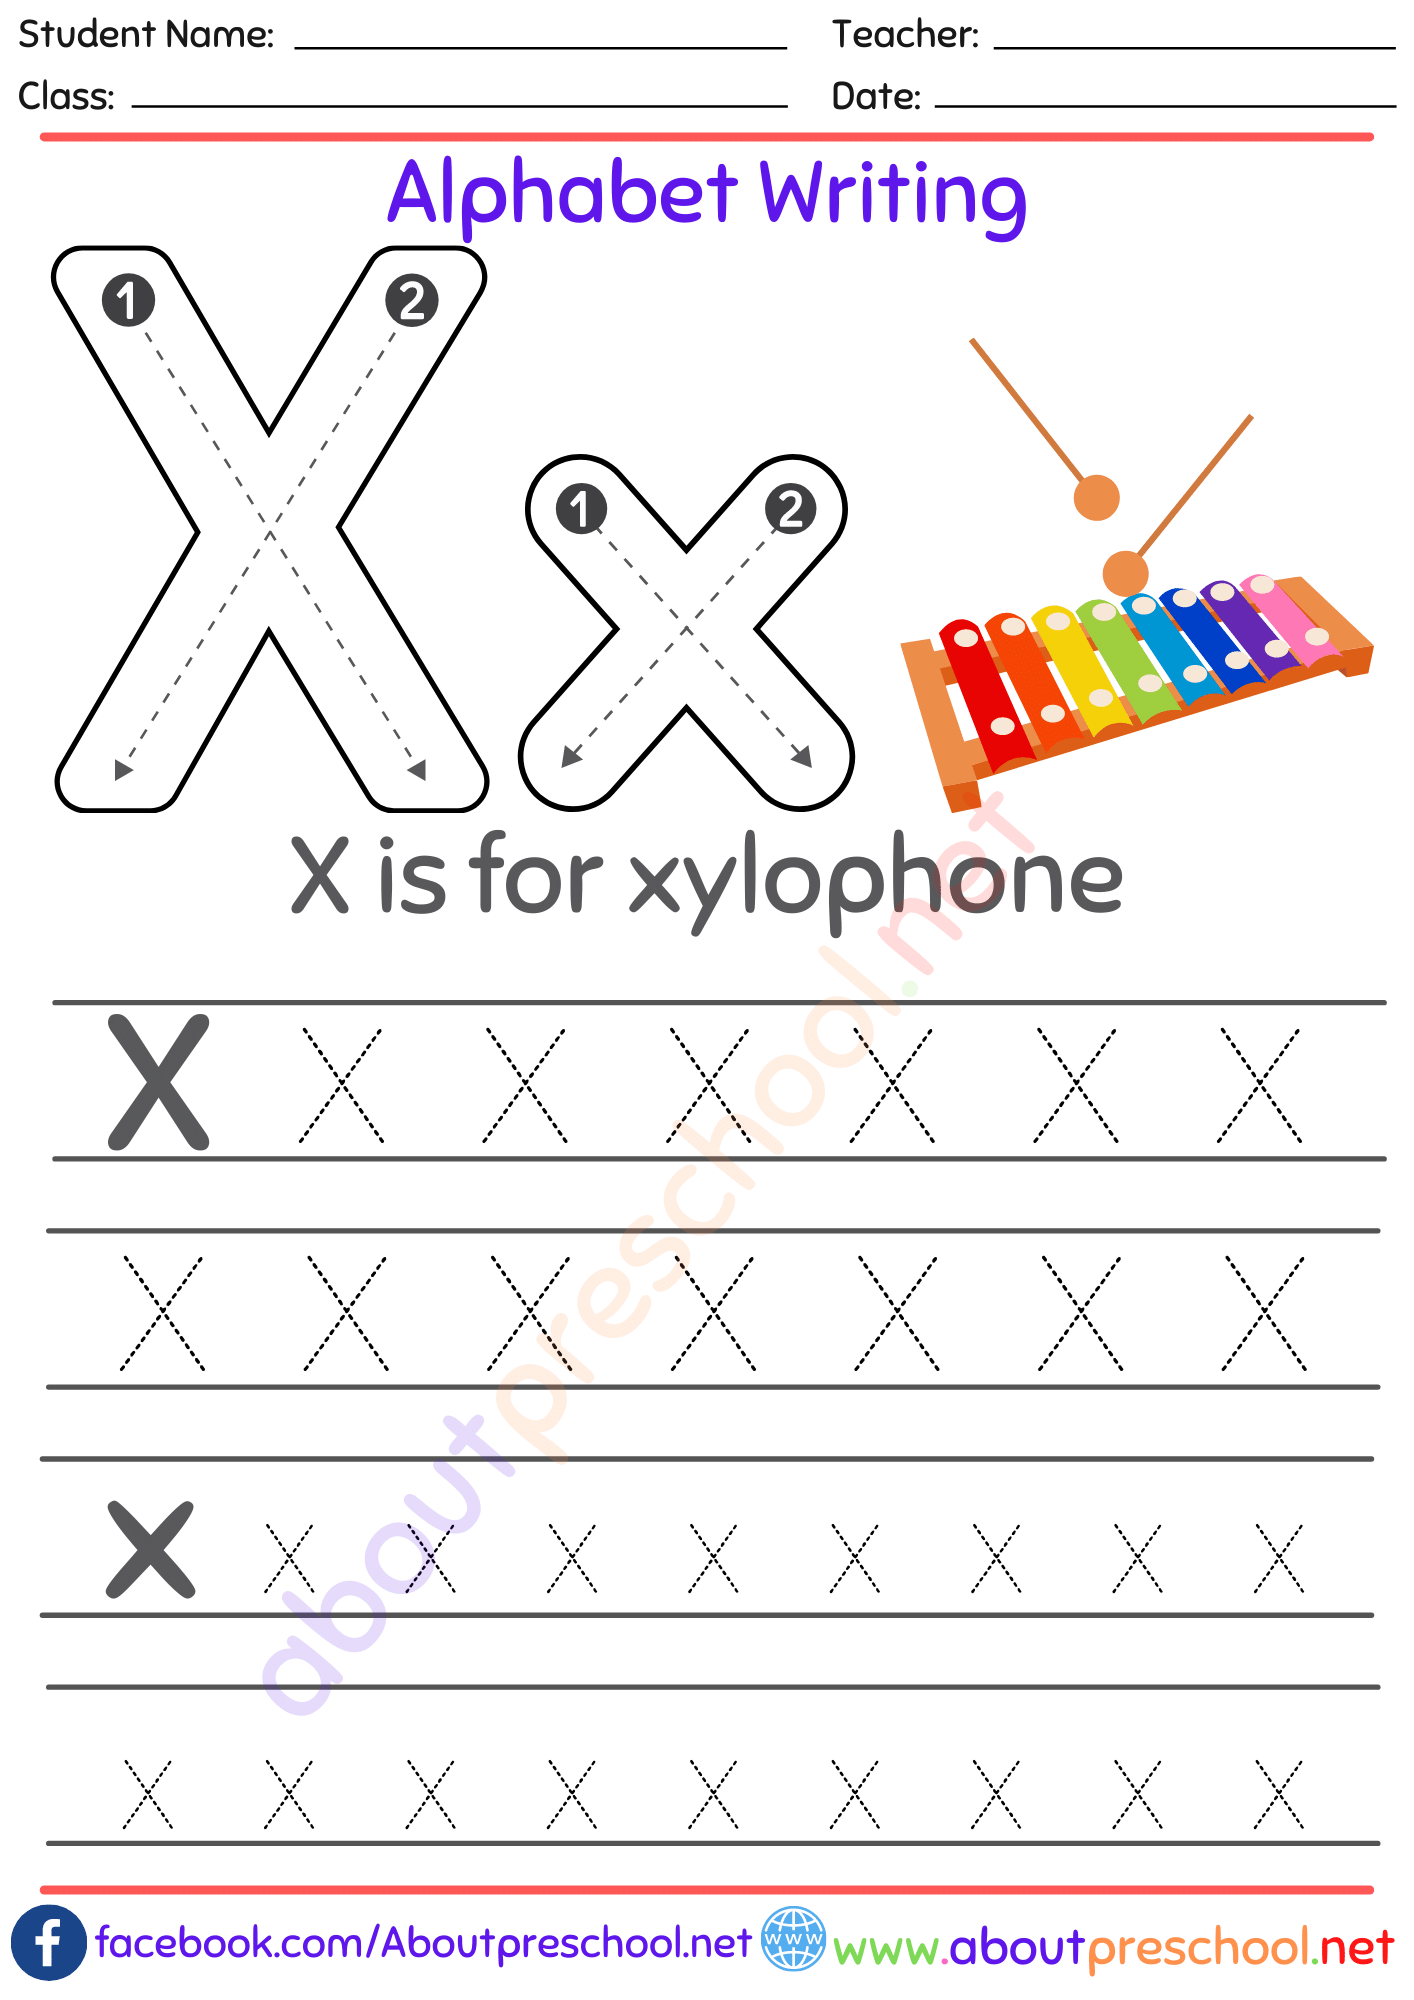 Alphabet Writing Worksheet x